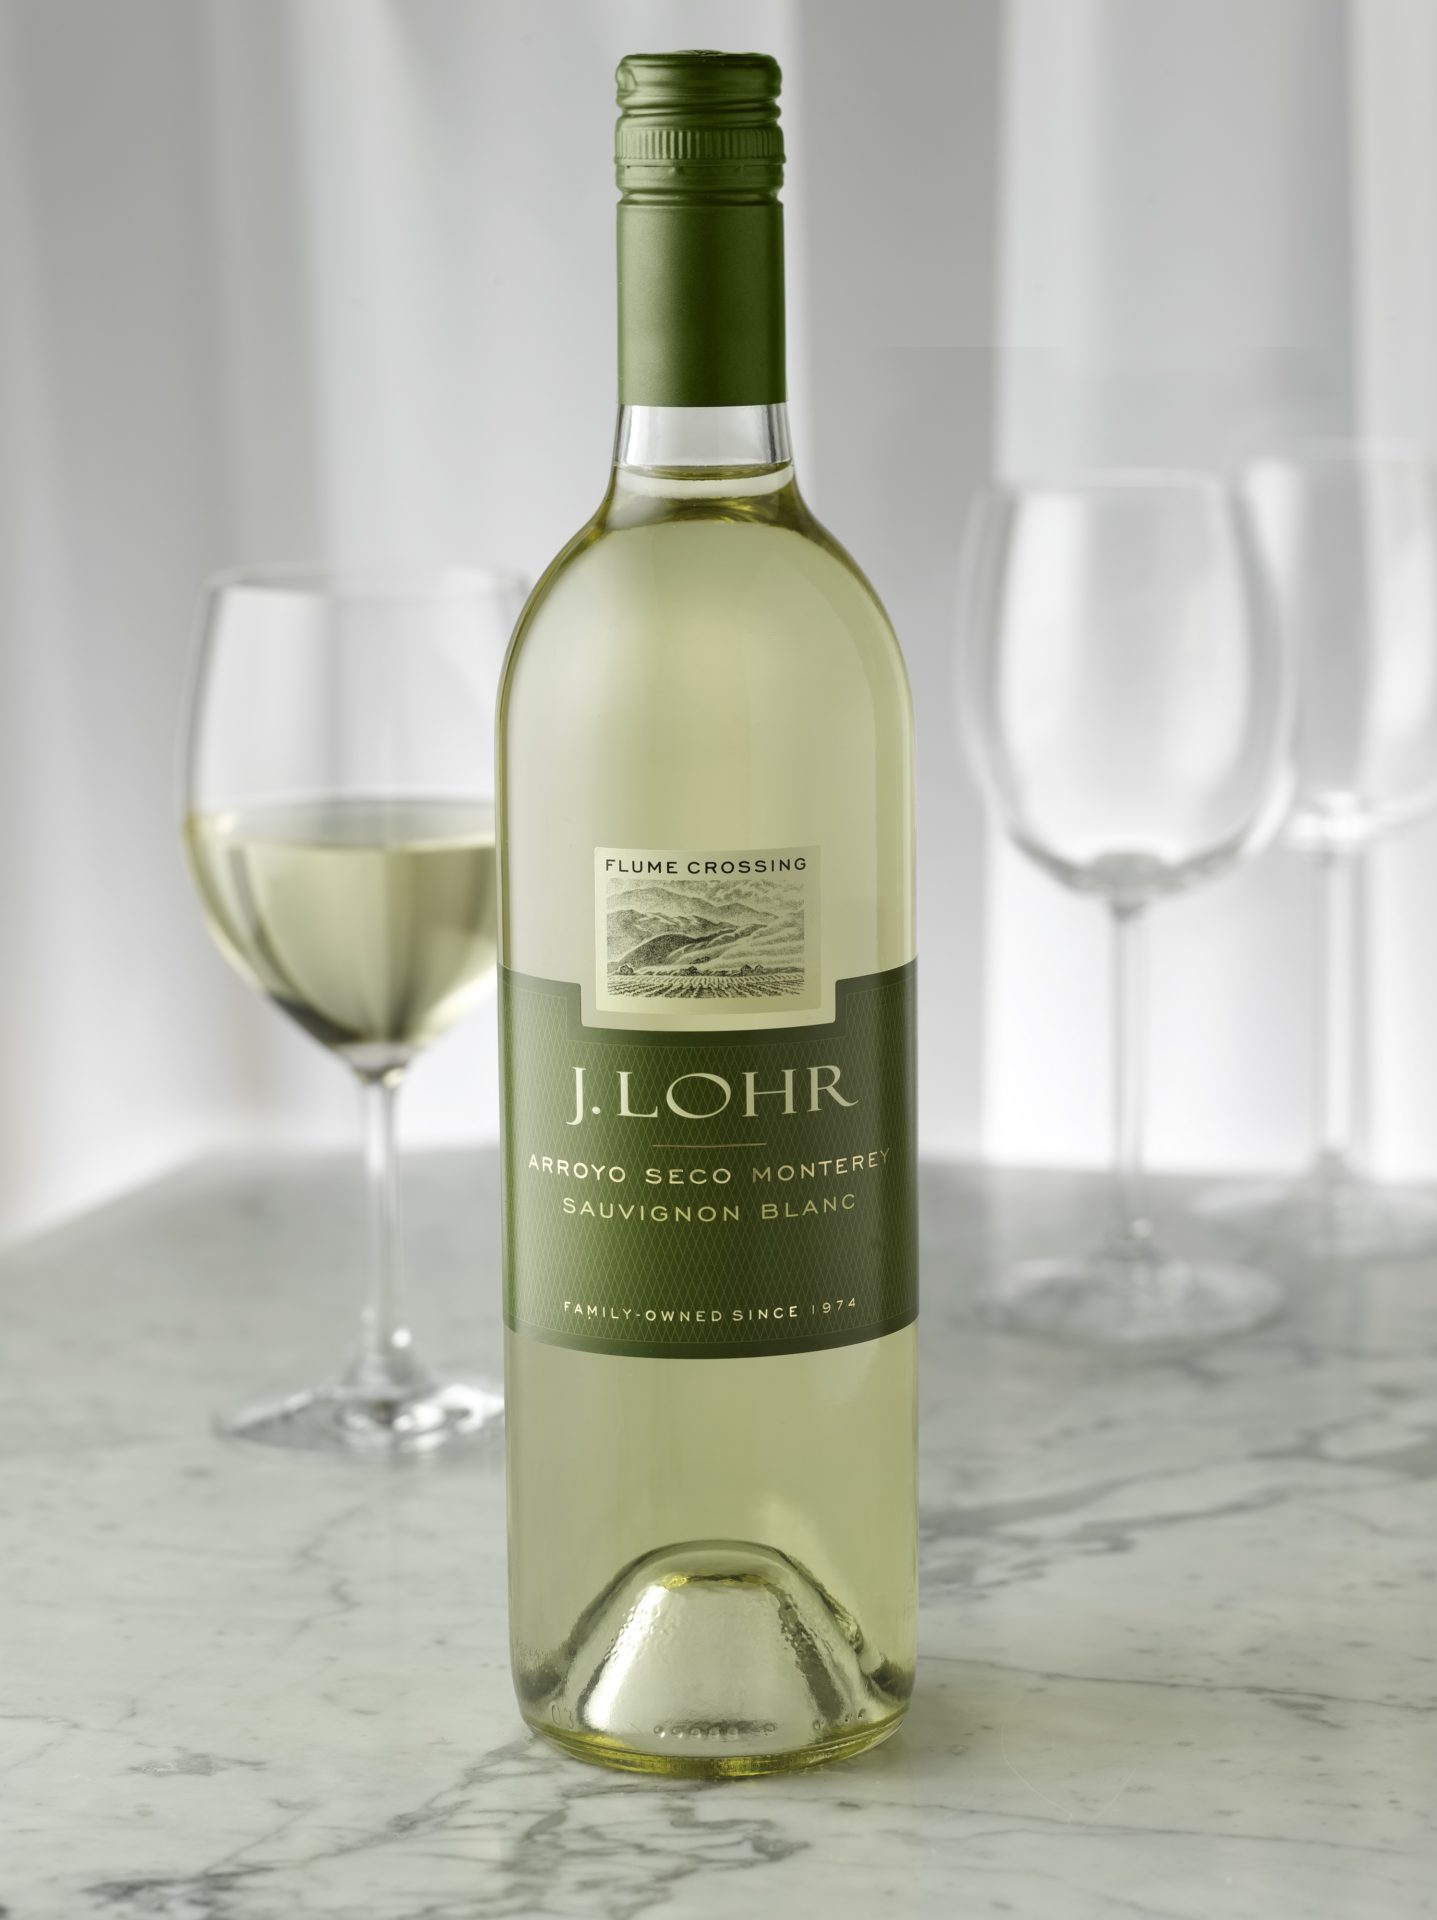 https://www.spiritedbiz.com/wp-content/uploads/2021/01/J.-Lohr-Estates-Flume-Crossing-Sauvignon-Blanc-with-wine-glasses.jpg